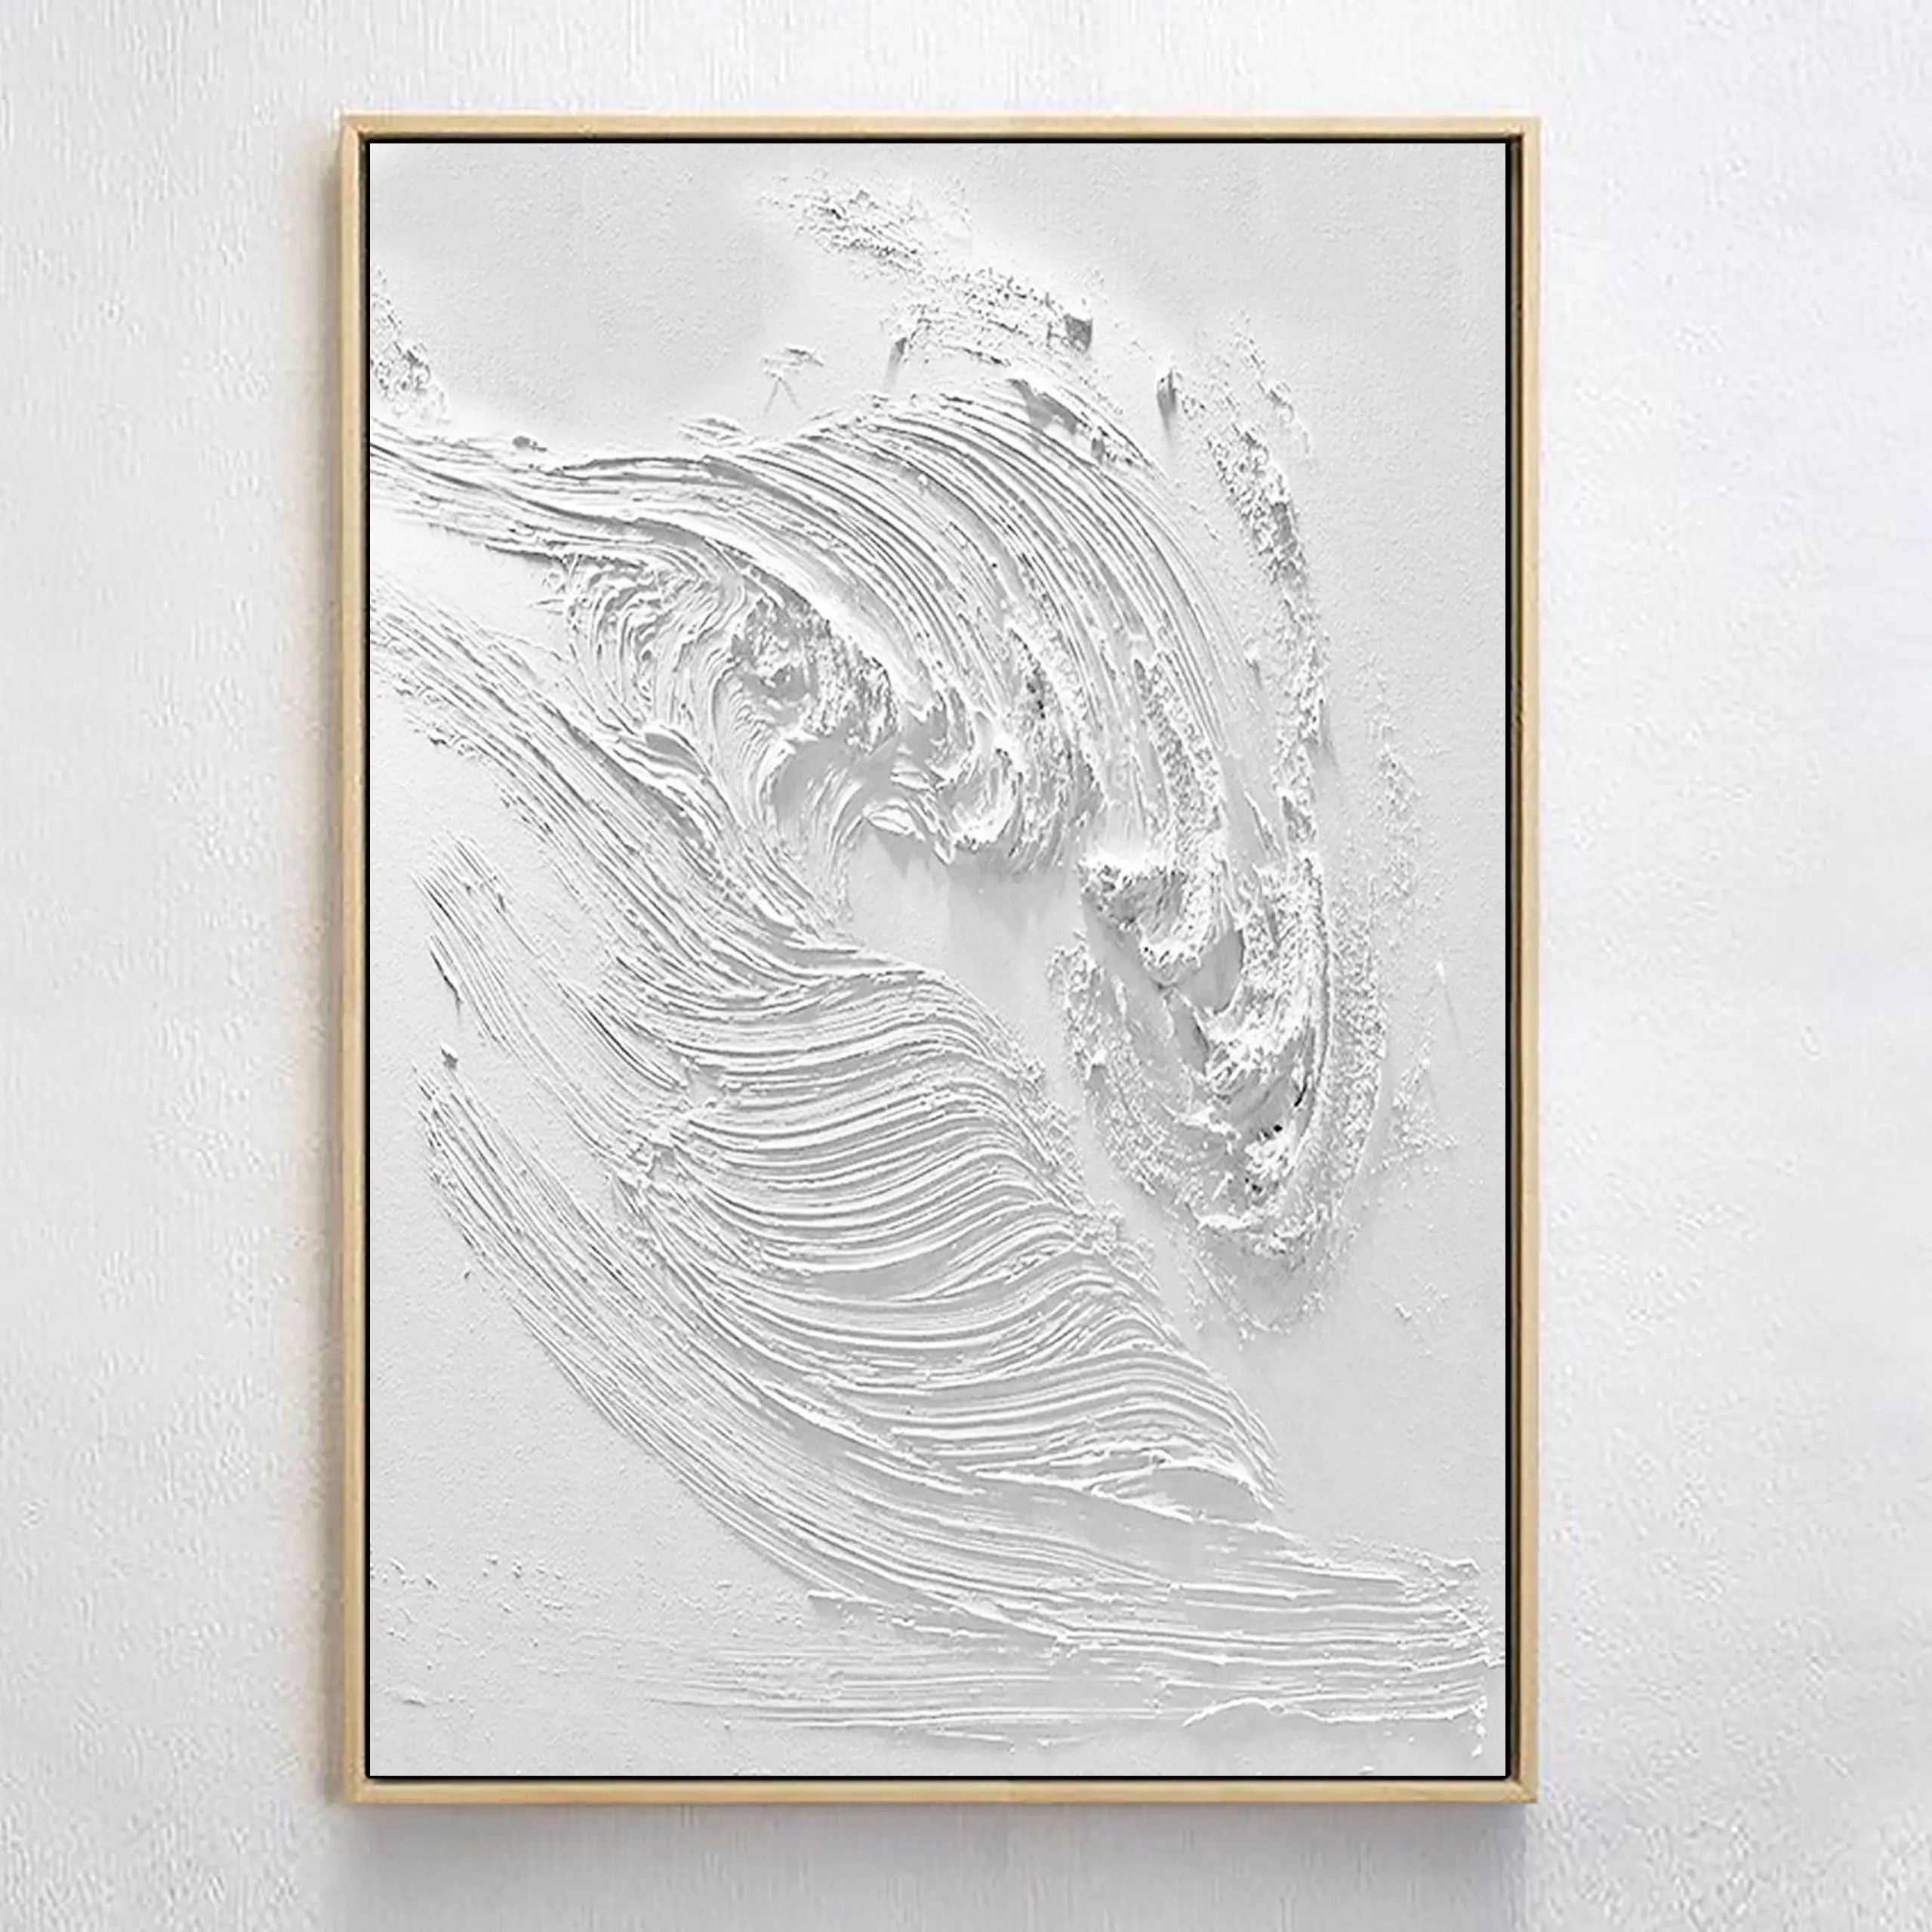 White Ocean Waves Textured Plaster Art Painting, Minimalist Wall Artwork for Room Decor